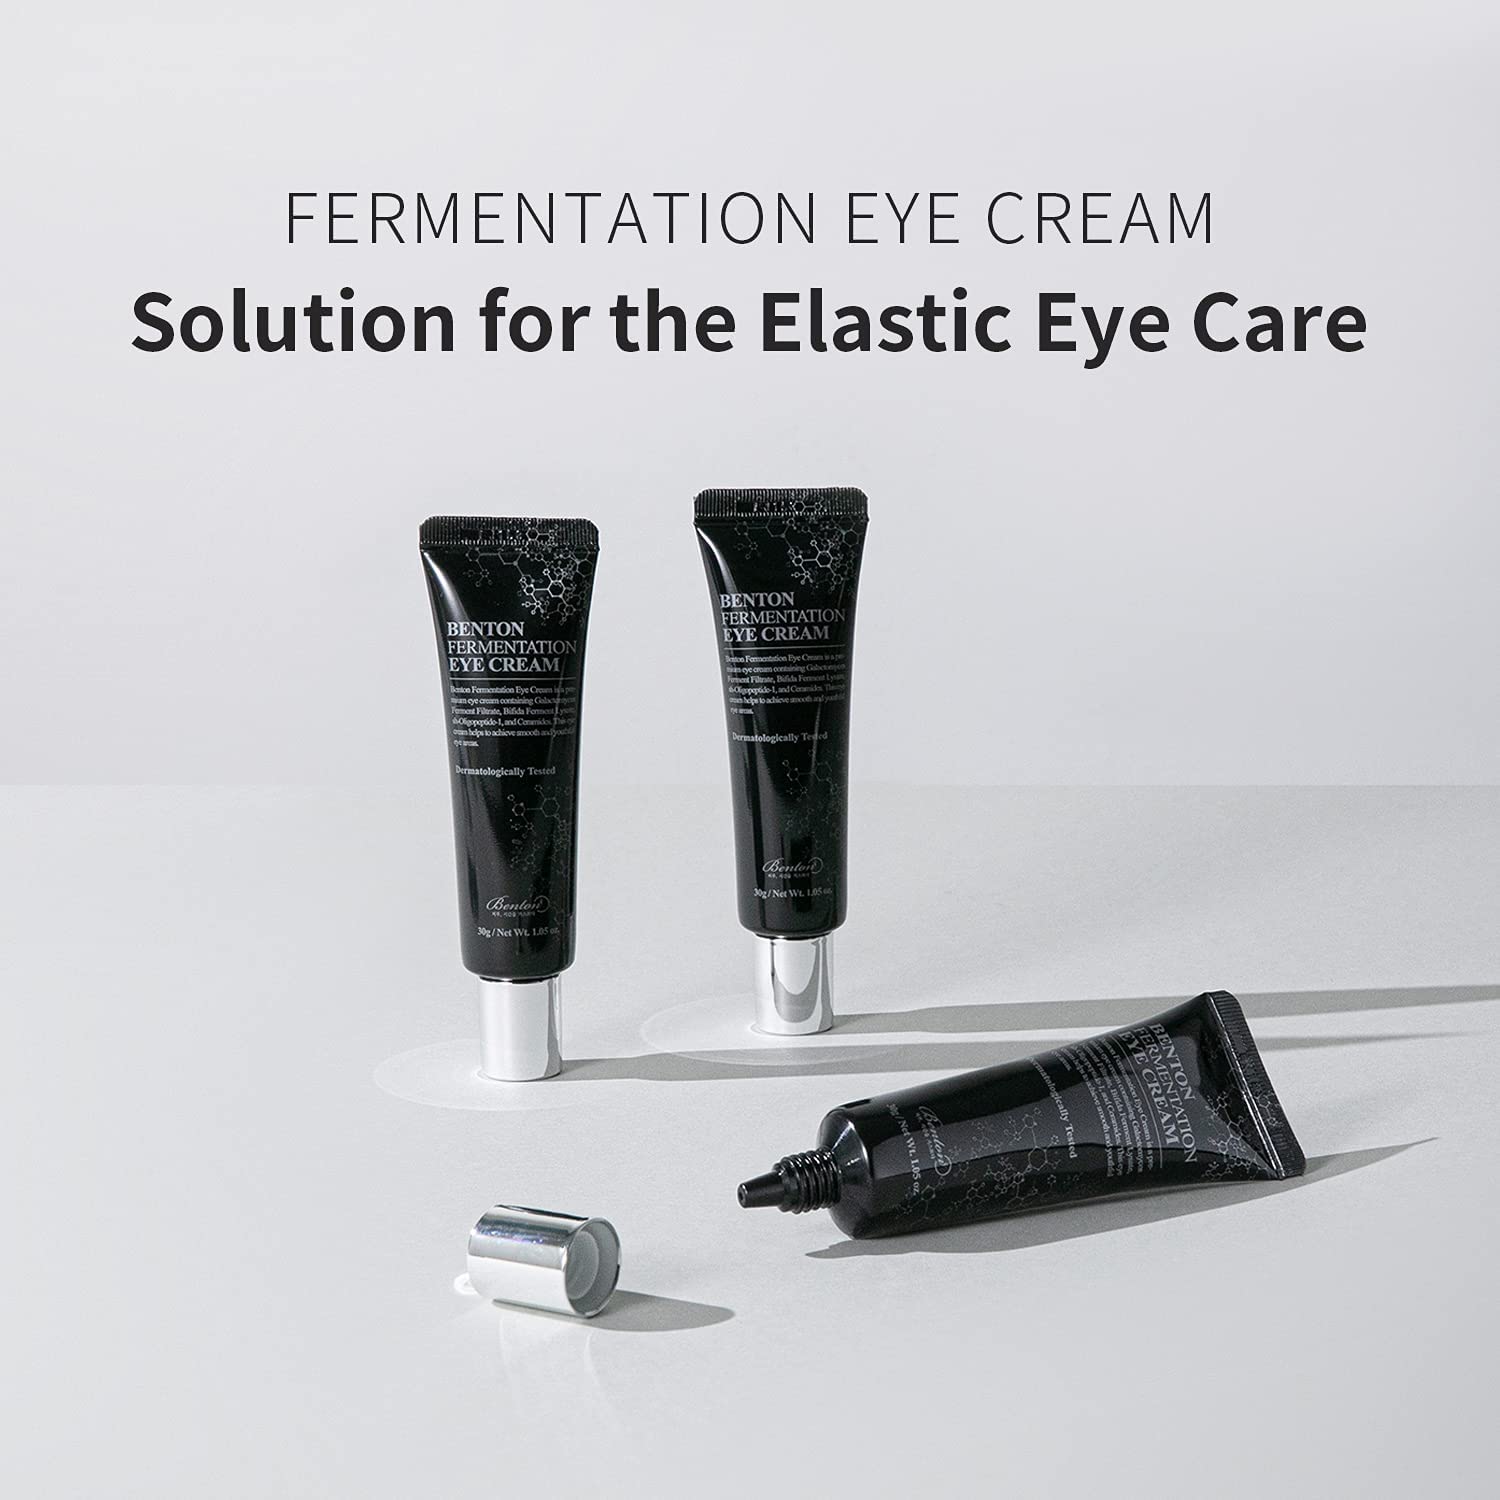 Benton Fermentation Eye Cream Anti-Wrinkle Eye Treatment, 30g - image 2 of 11